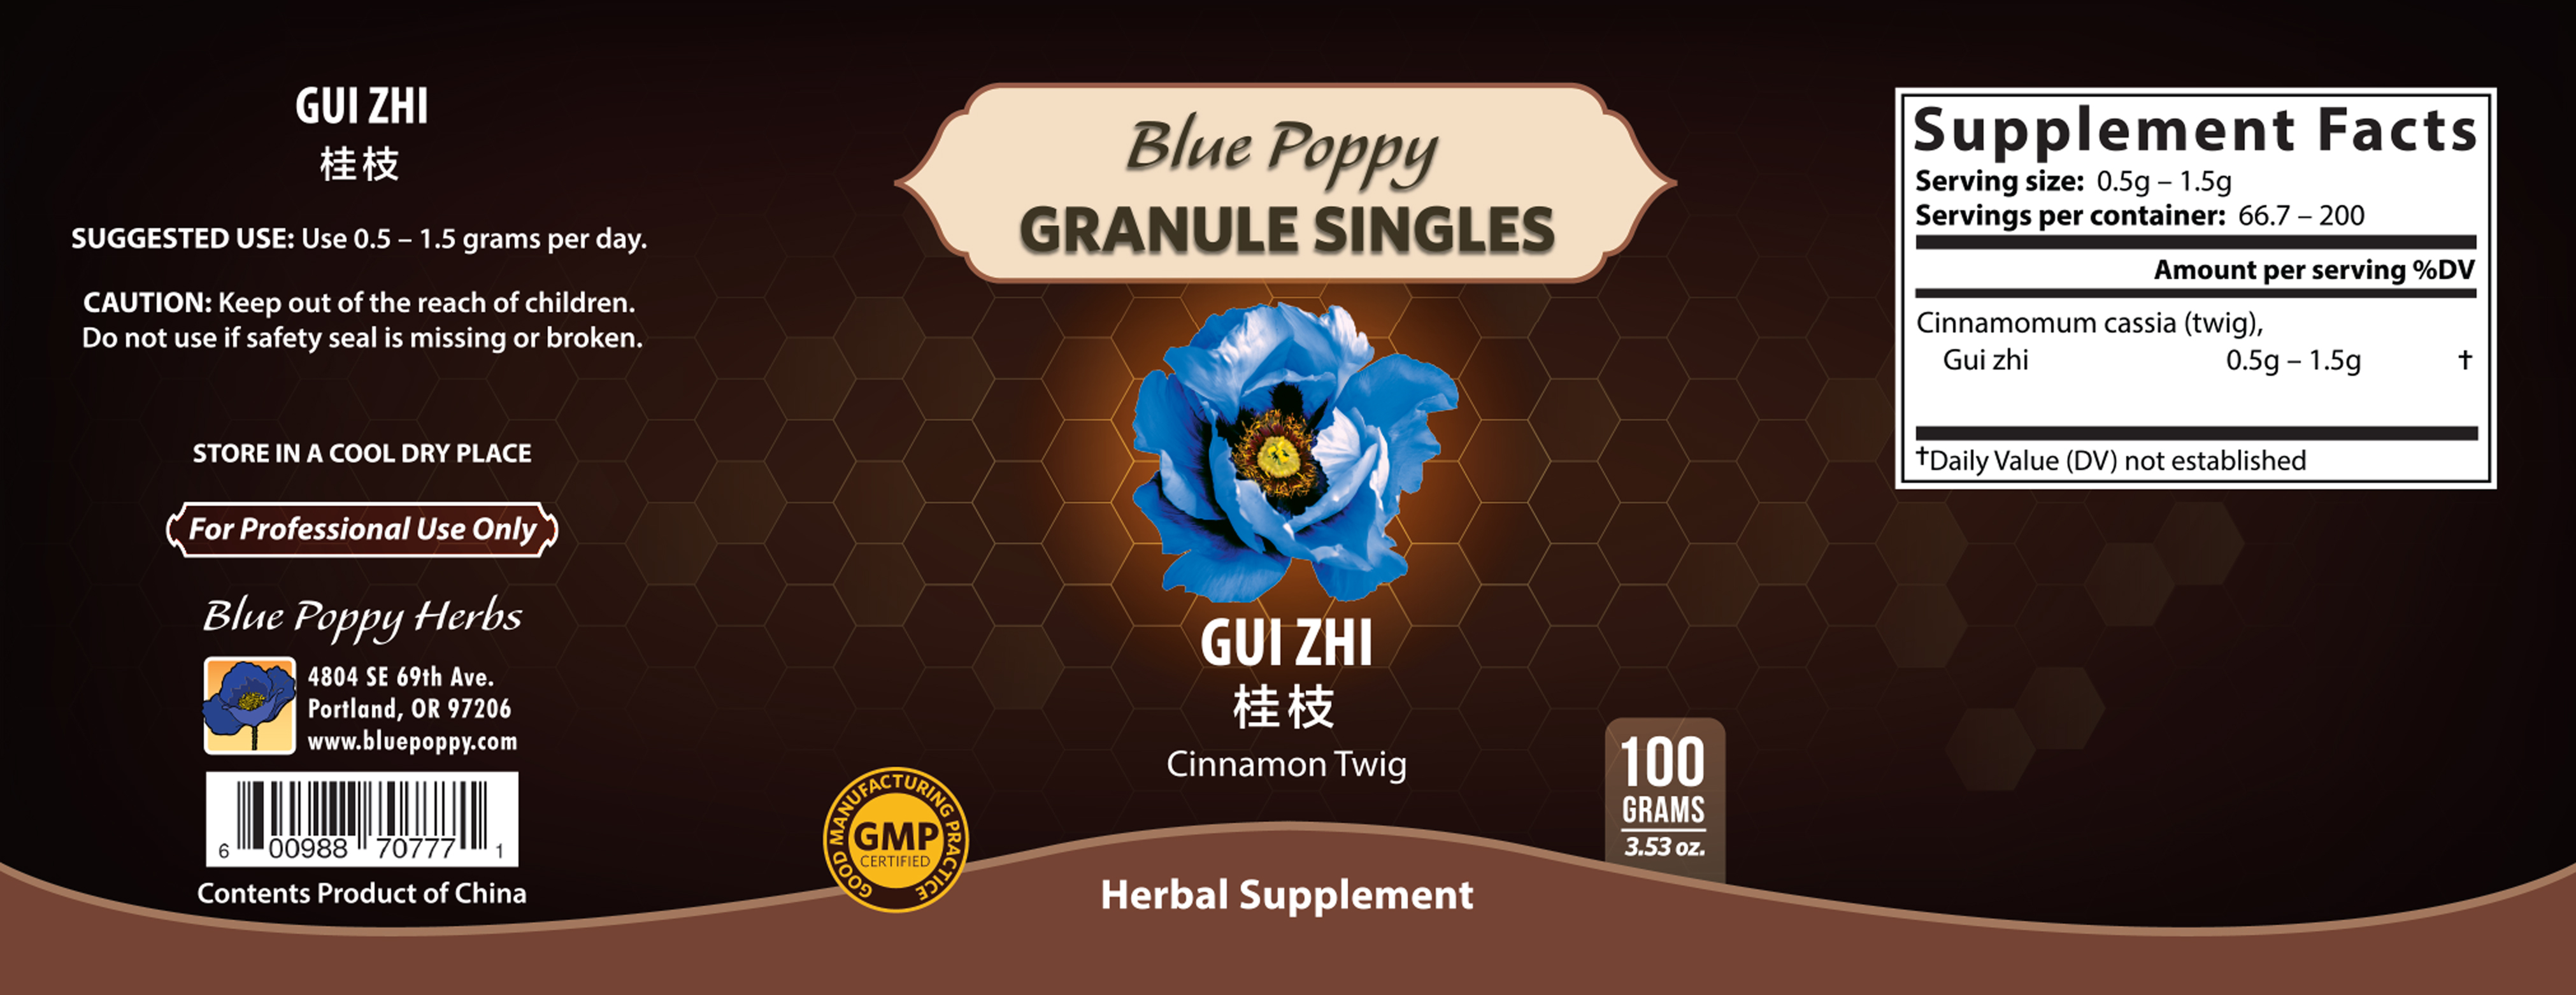 Gui Zhi Granules